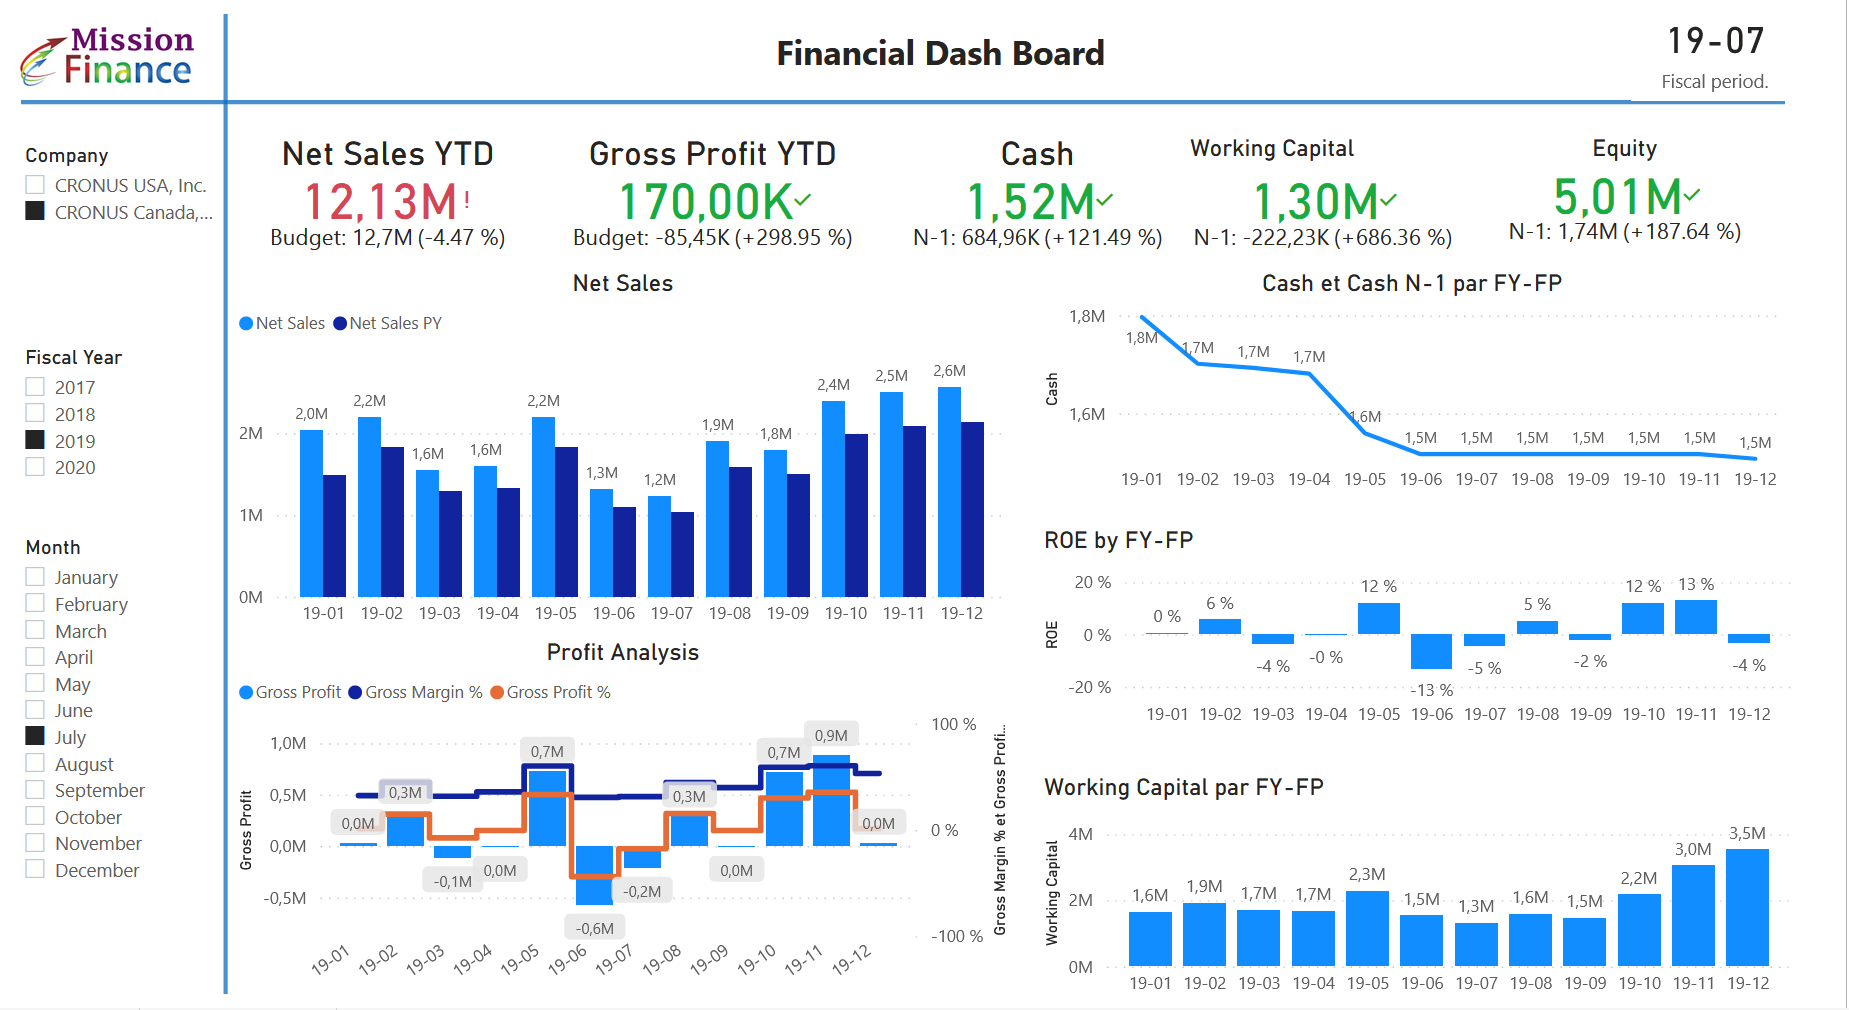 Power BI gestion Mission Finance Financial dash board